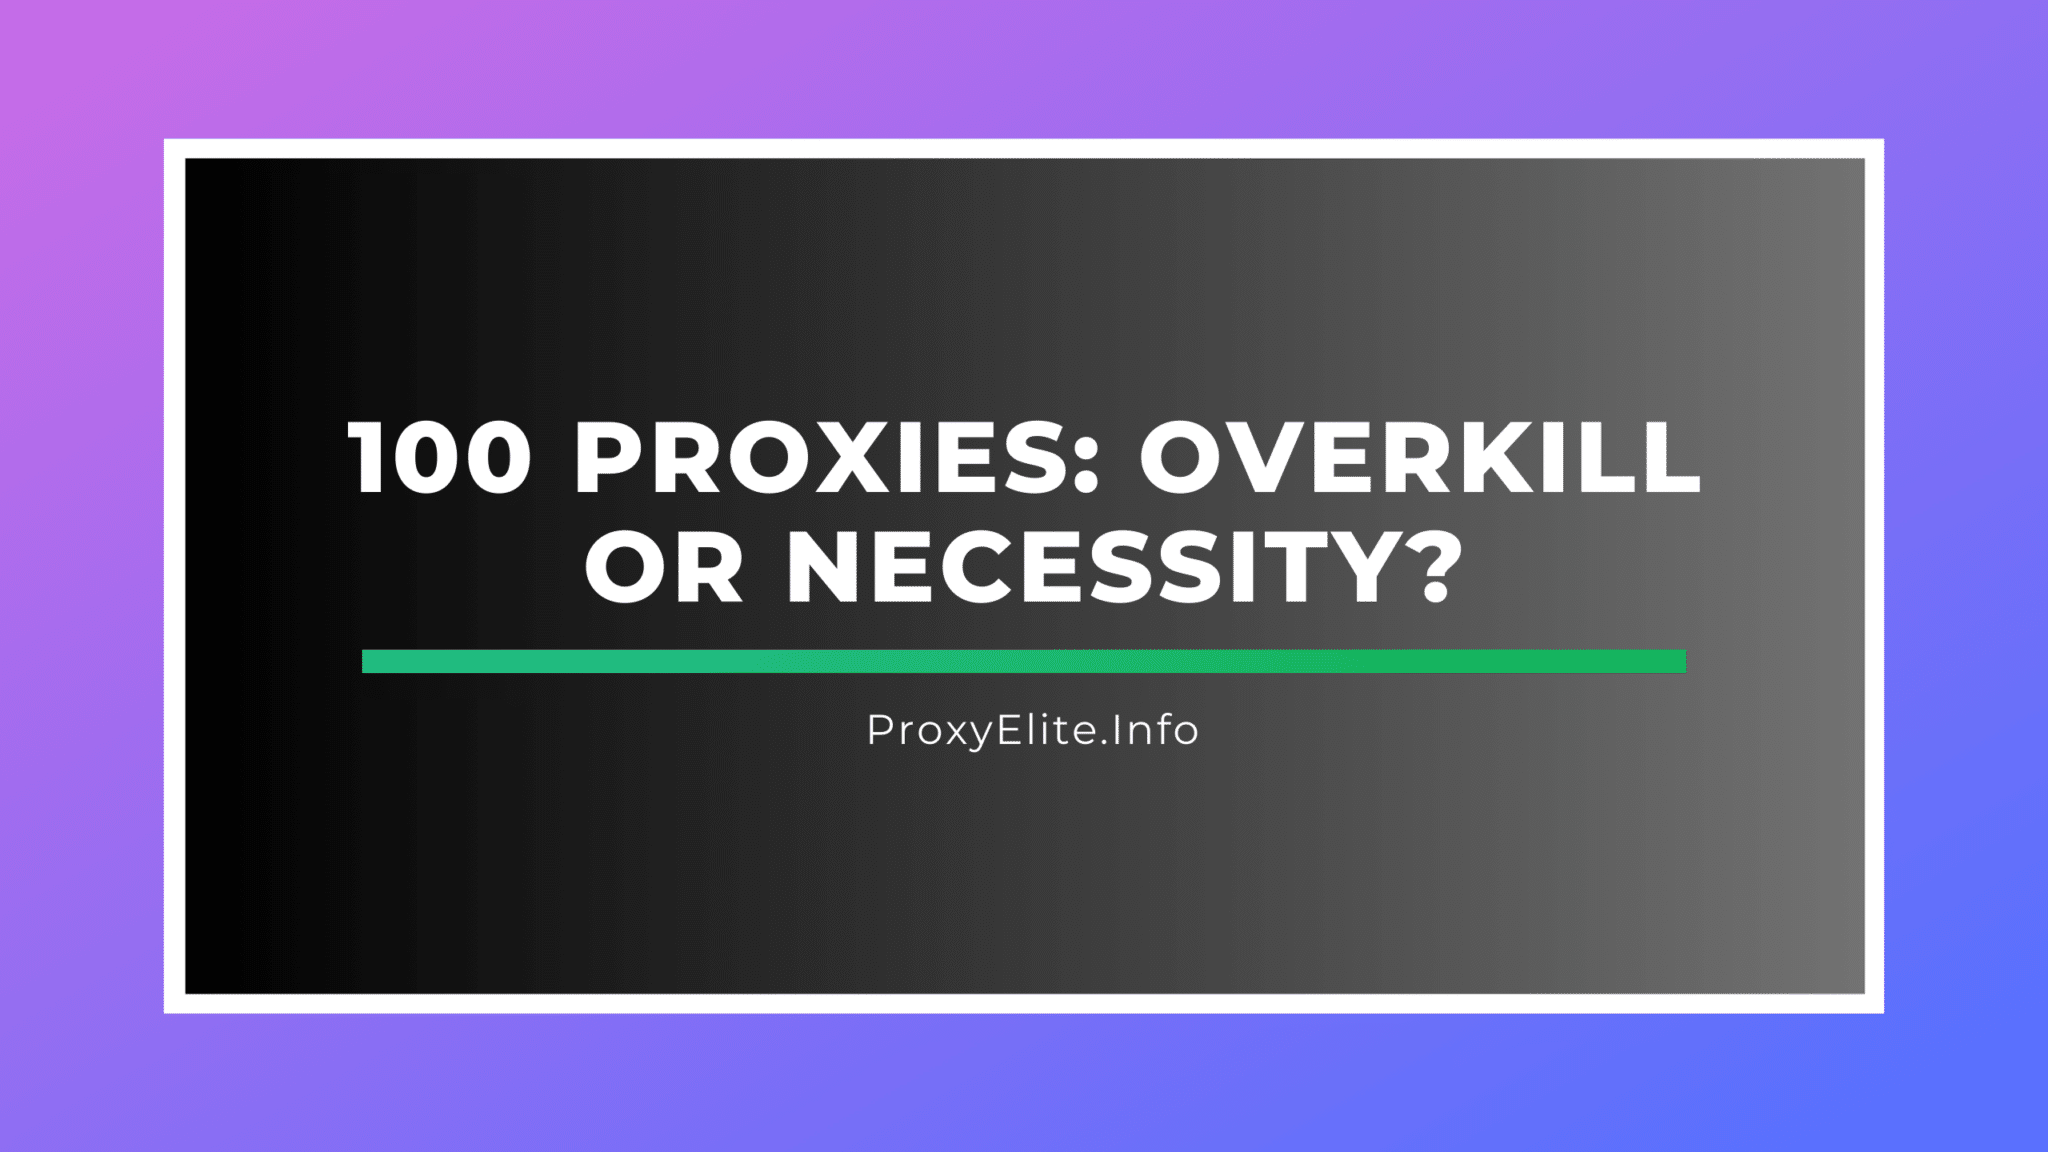 100 Proxies: Exagero ou Necessidade?